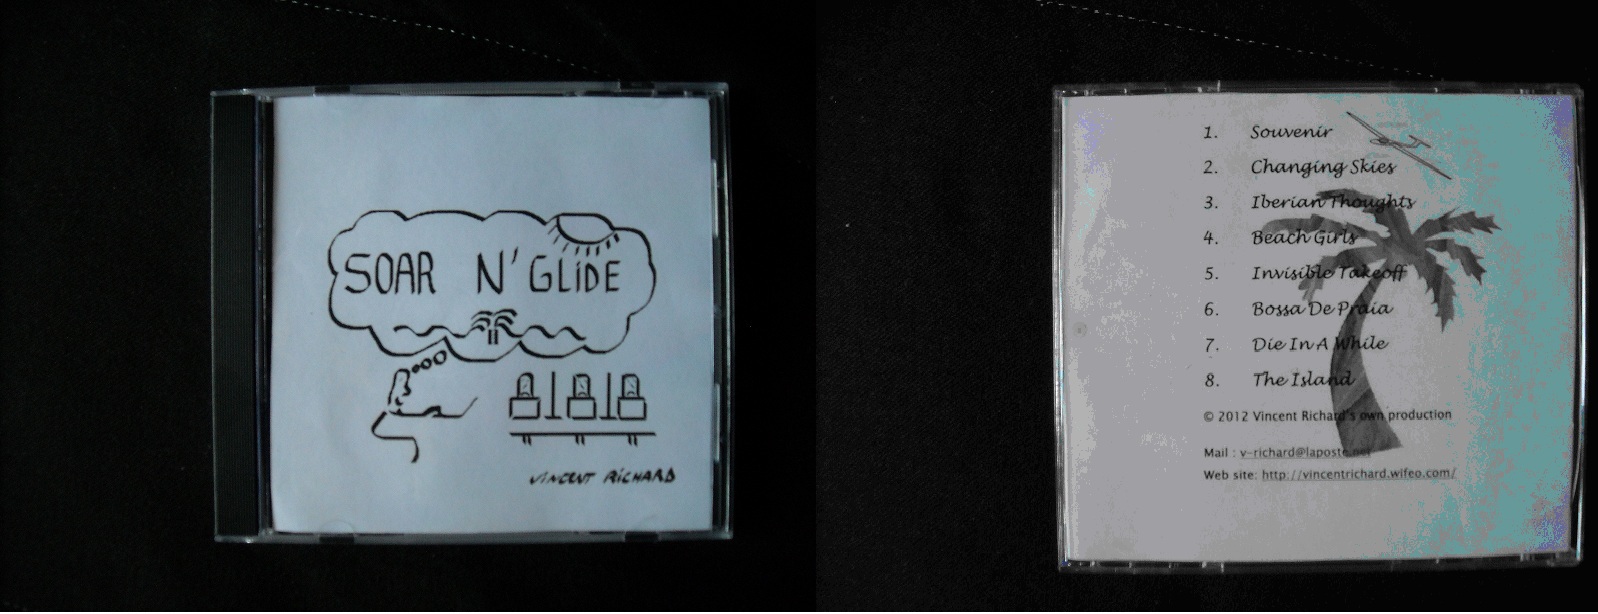 Album CD Soar N' Glide